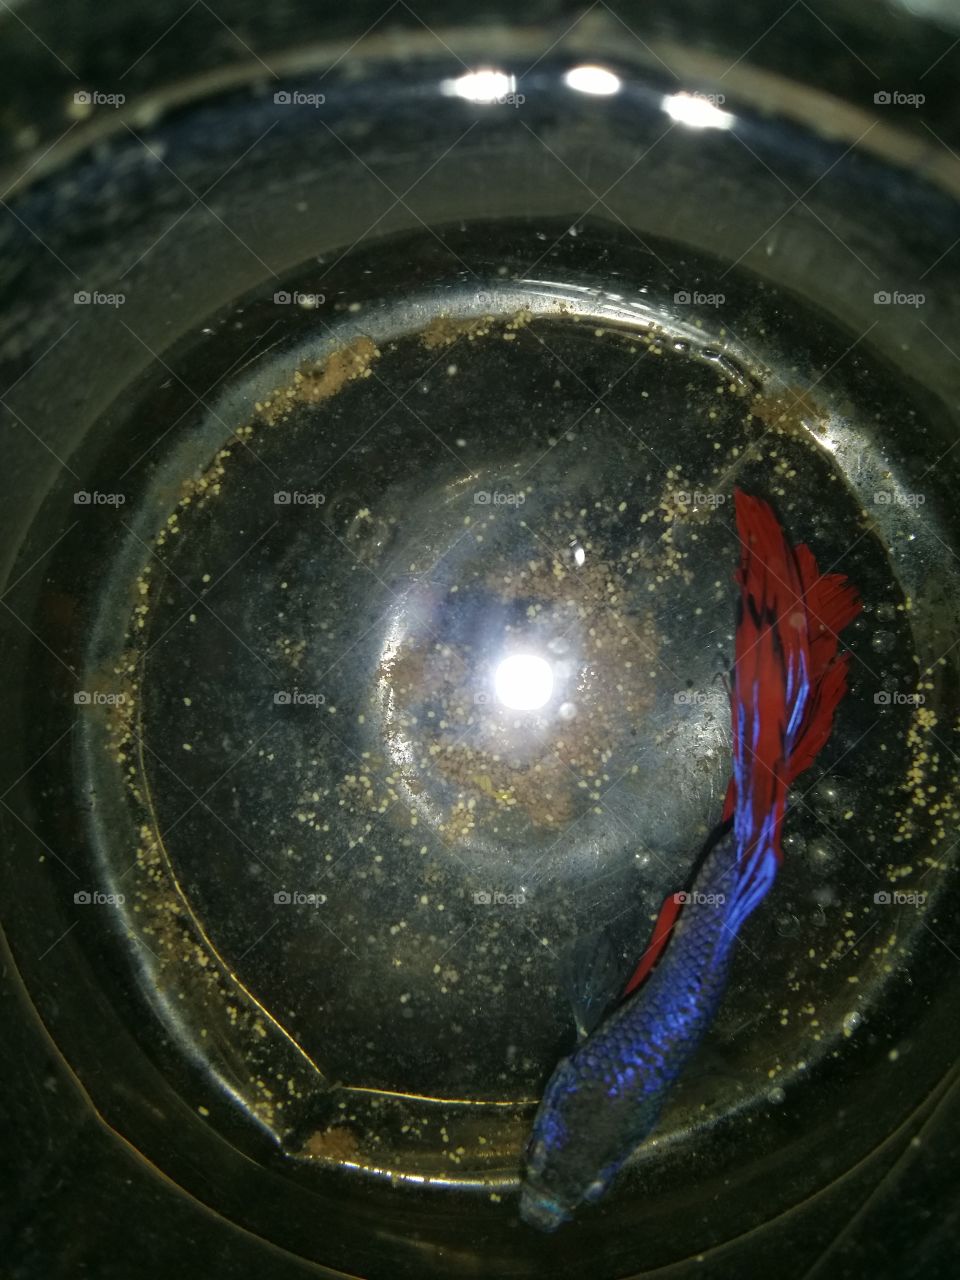 Fish in the plastic tank